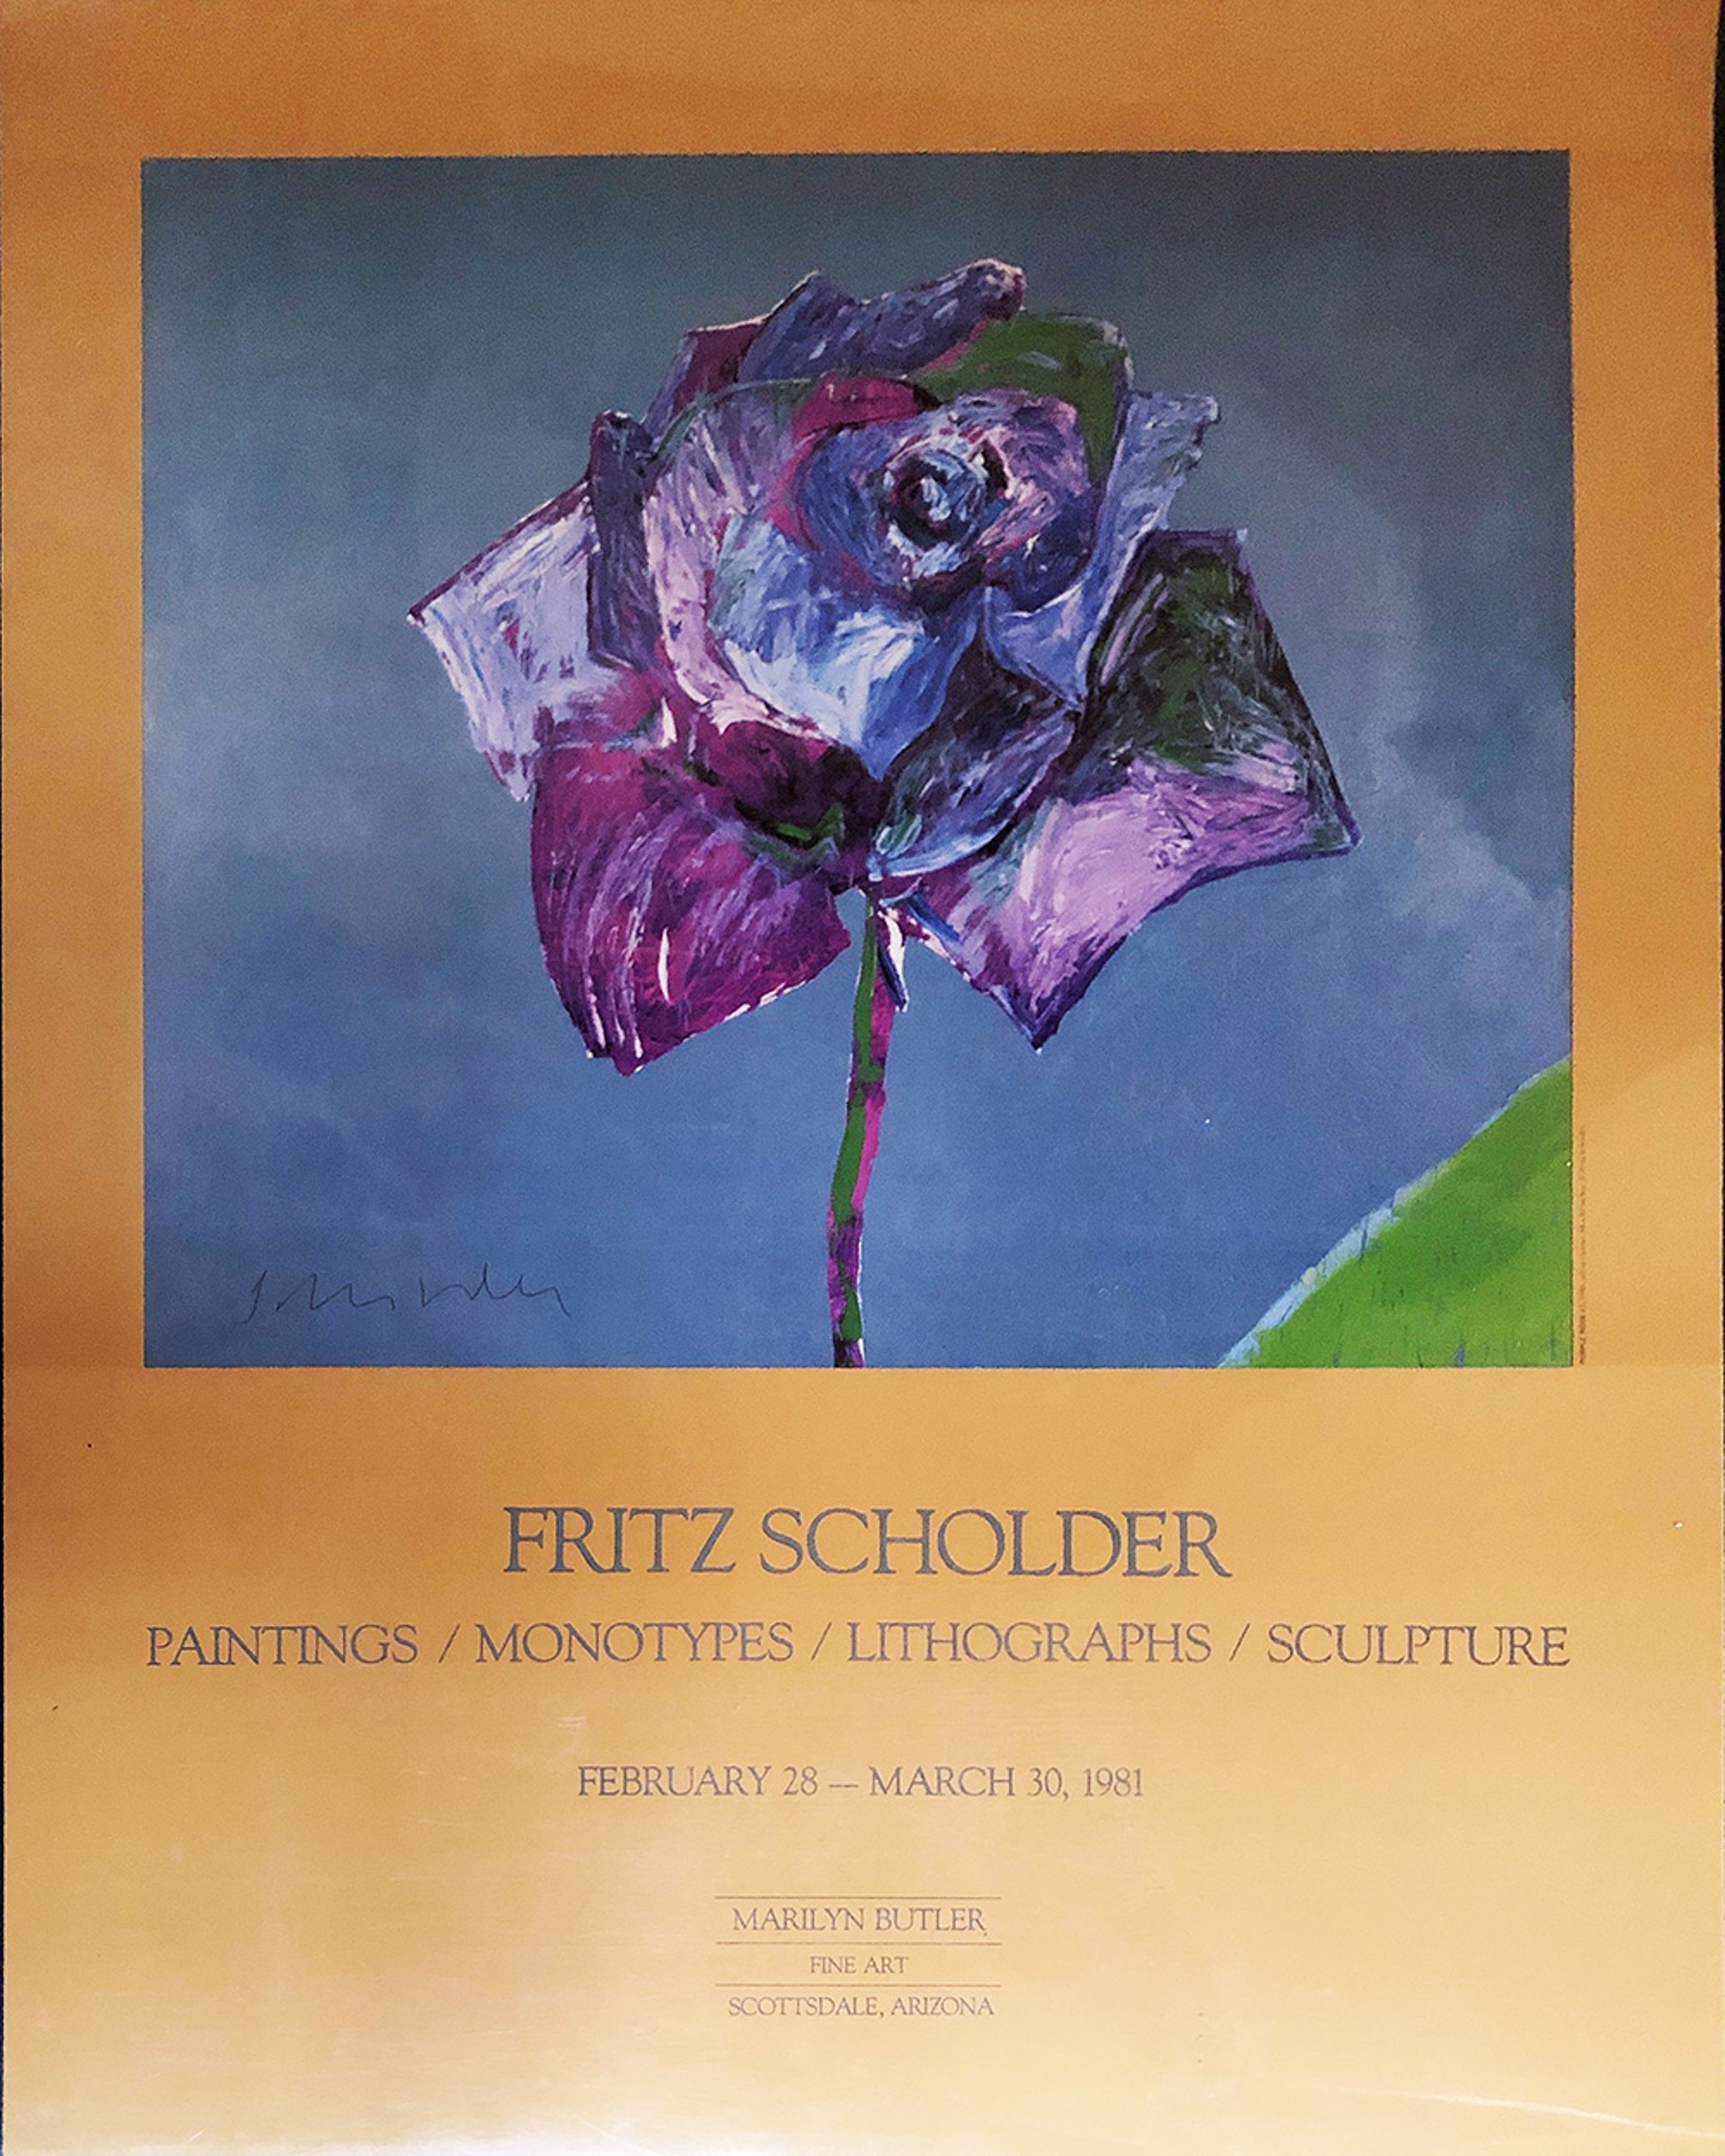 Marilyn Butler Fine Art 1981 (The Rose Image) by Fritz Scholder